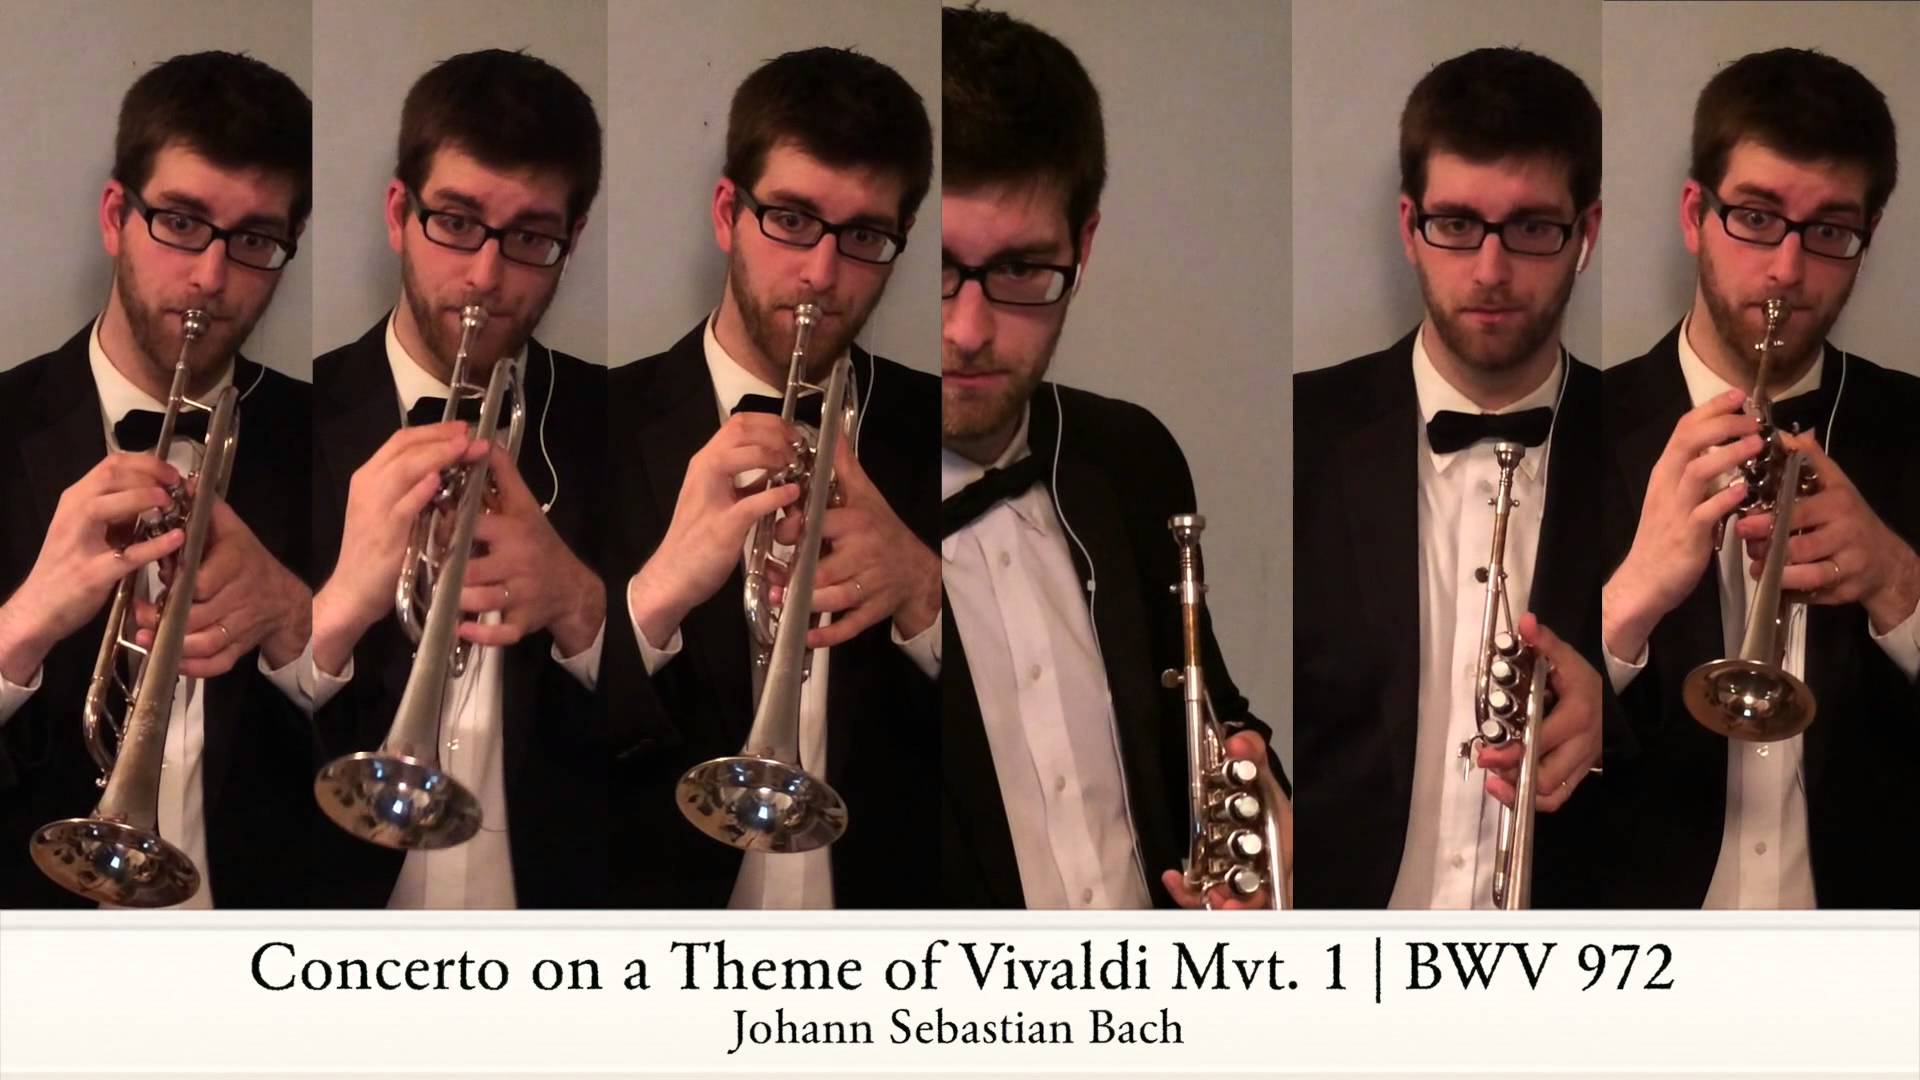 Trumpet Player Creates Brilliant New Arrangement Of Bach Concerto on a Theme of Vivaldi